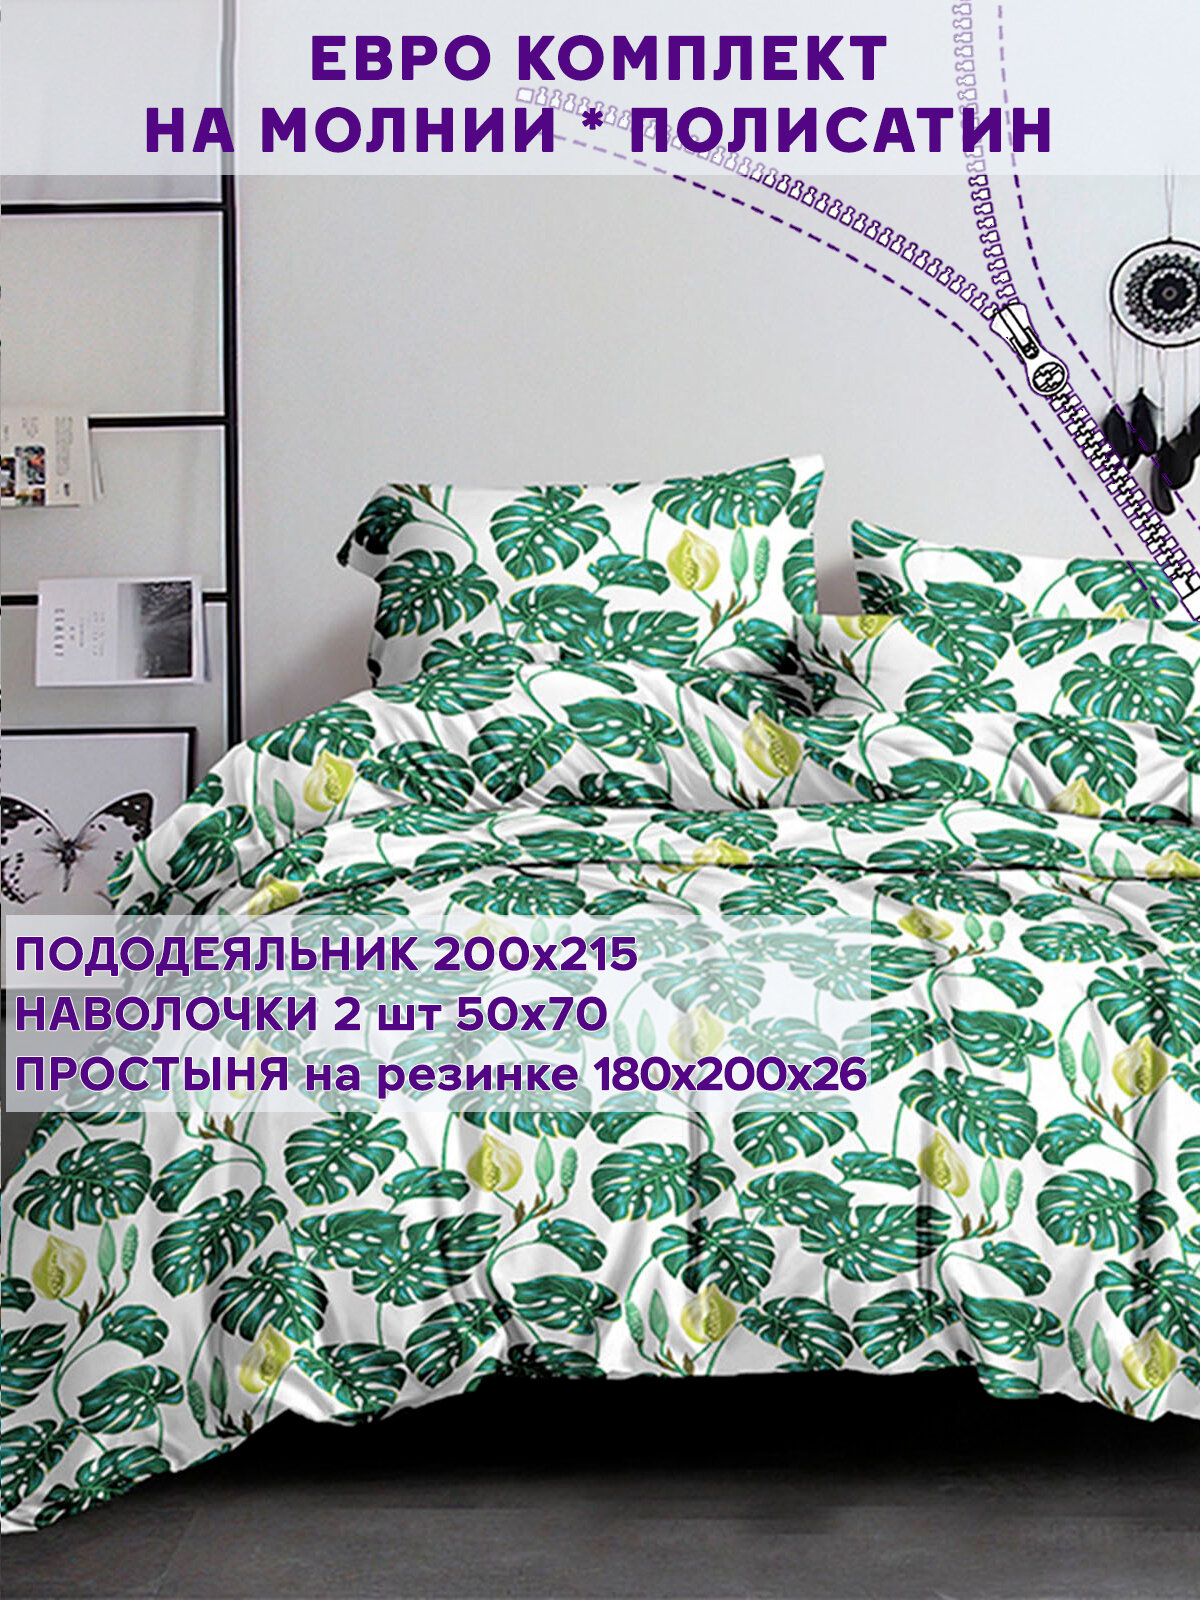 Постельное белье Simple House "Filiko" евро наволочки 50х70 2шт Простынь на резинке 180х200 см Пододеяльник 200х215 см